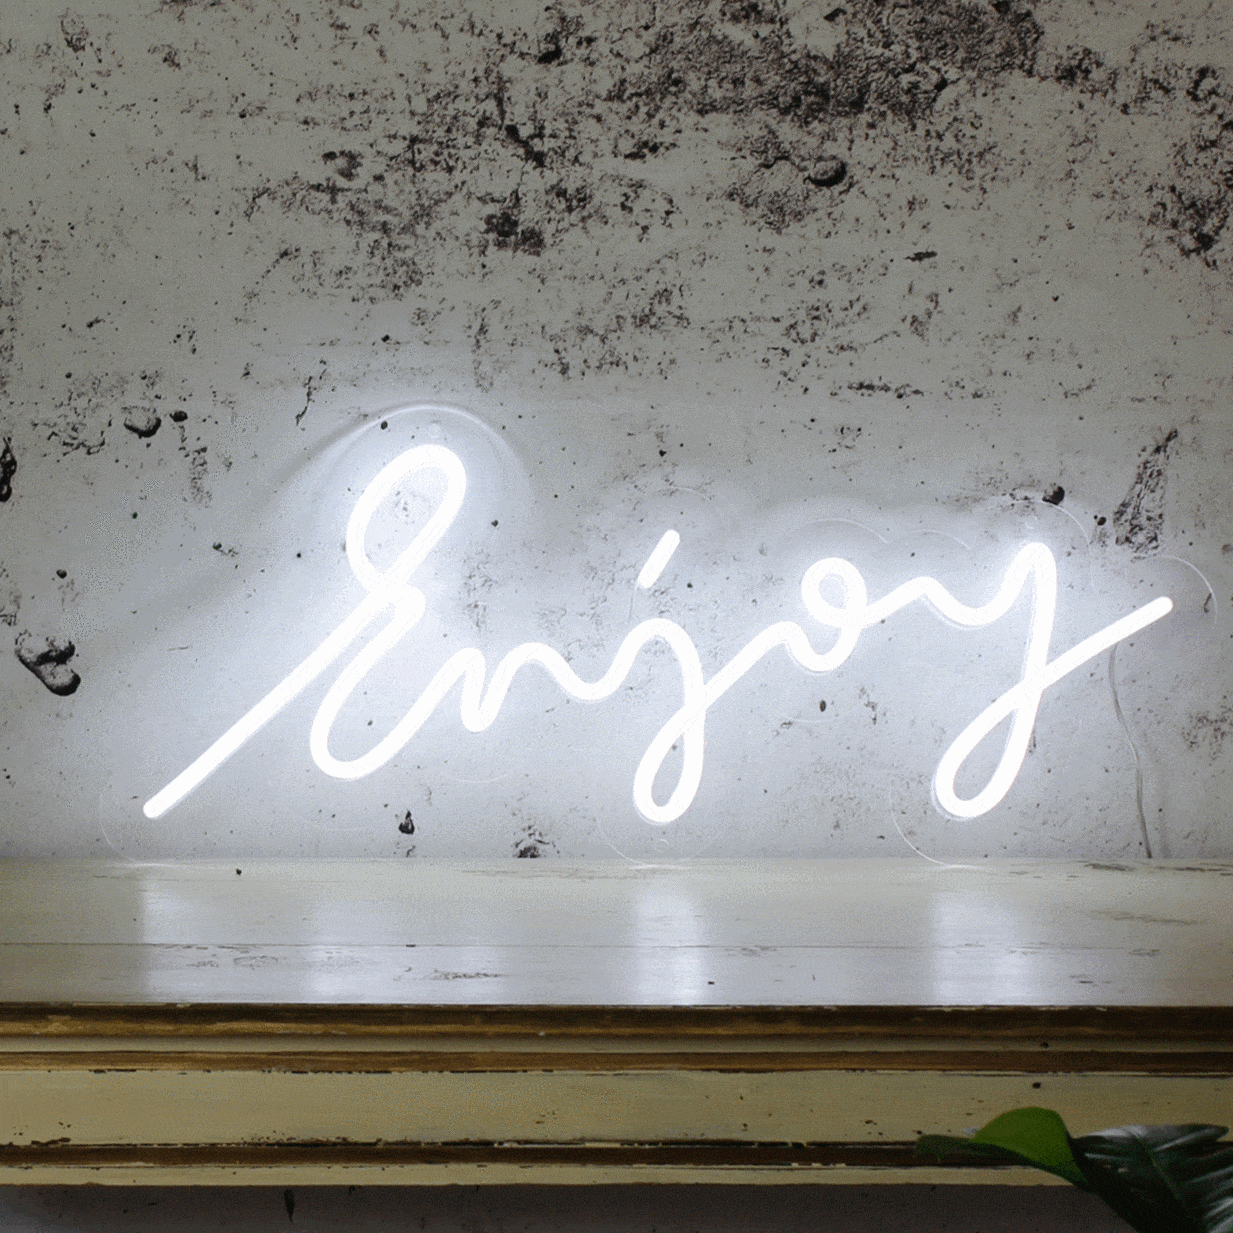 'Enjoy' LED neon sign